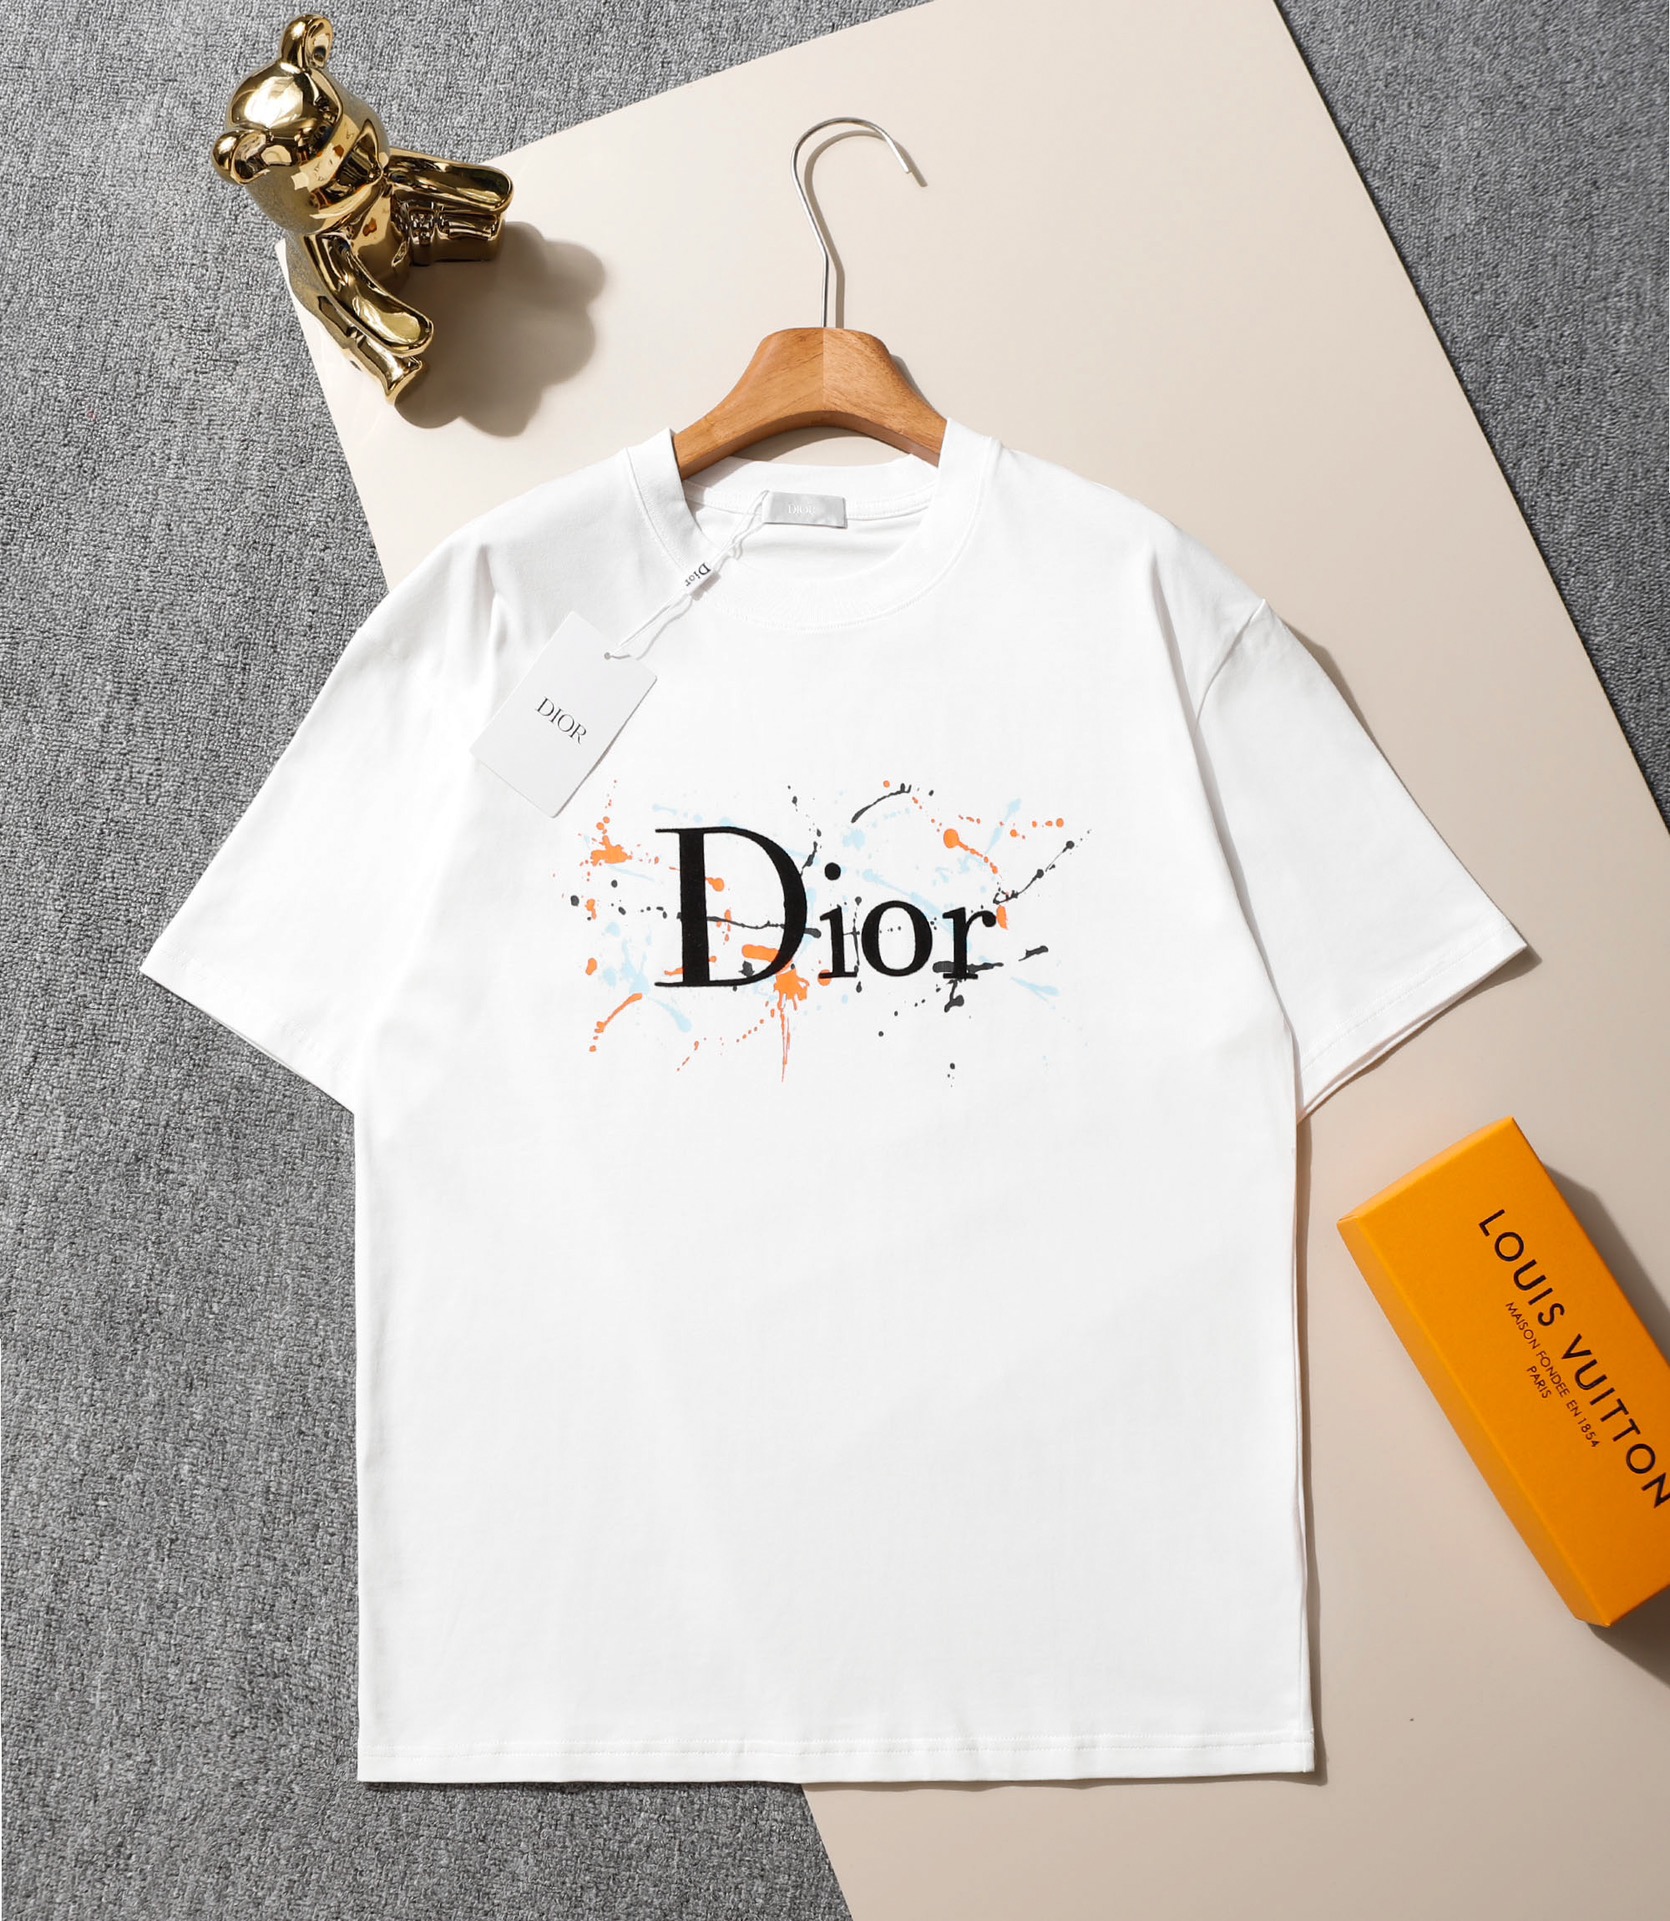 Dior Clothing T-Shirt Black White Printing Cotton Fashion Short Sleeve